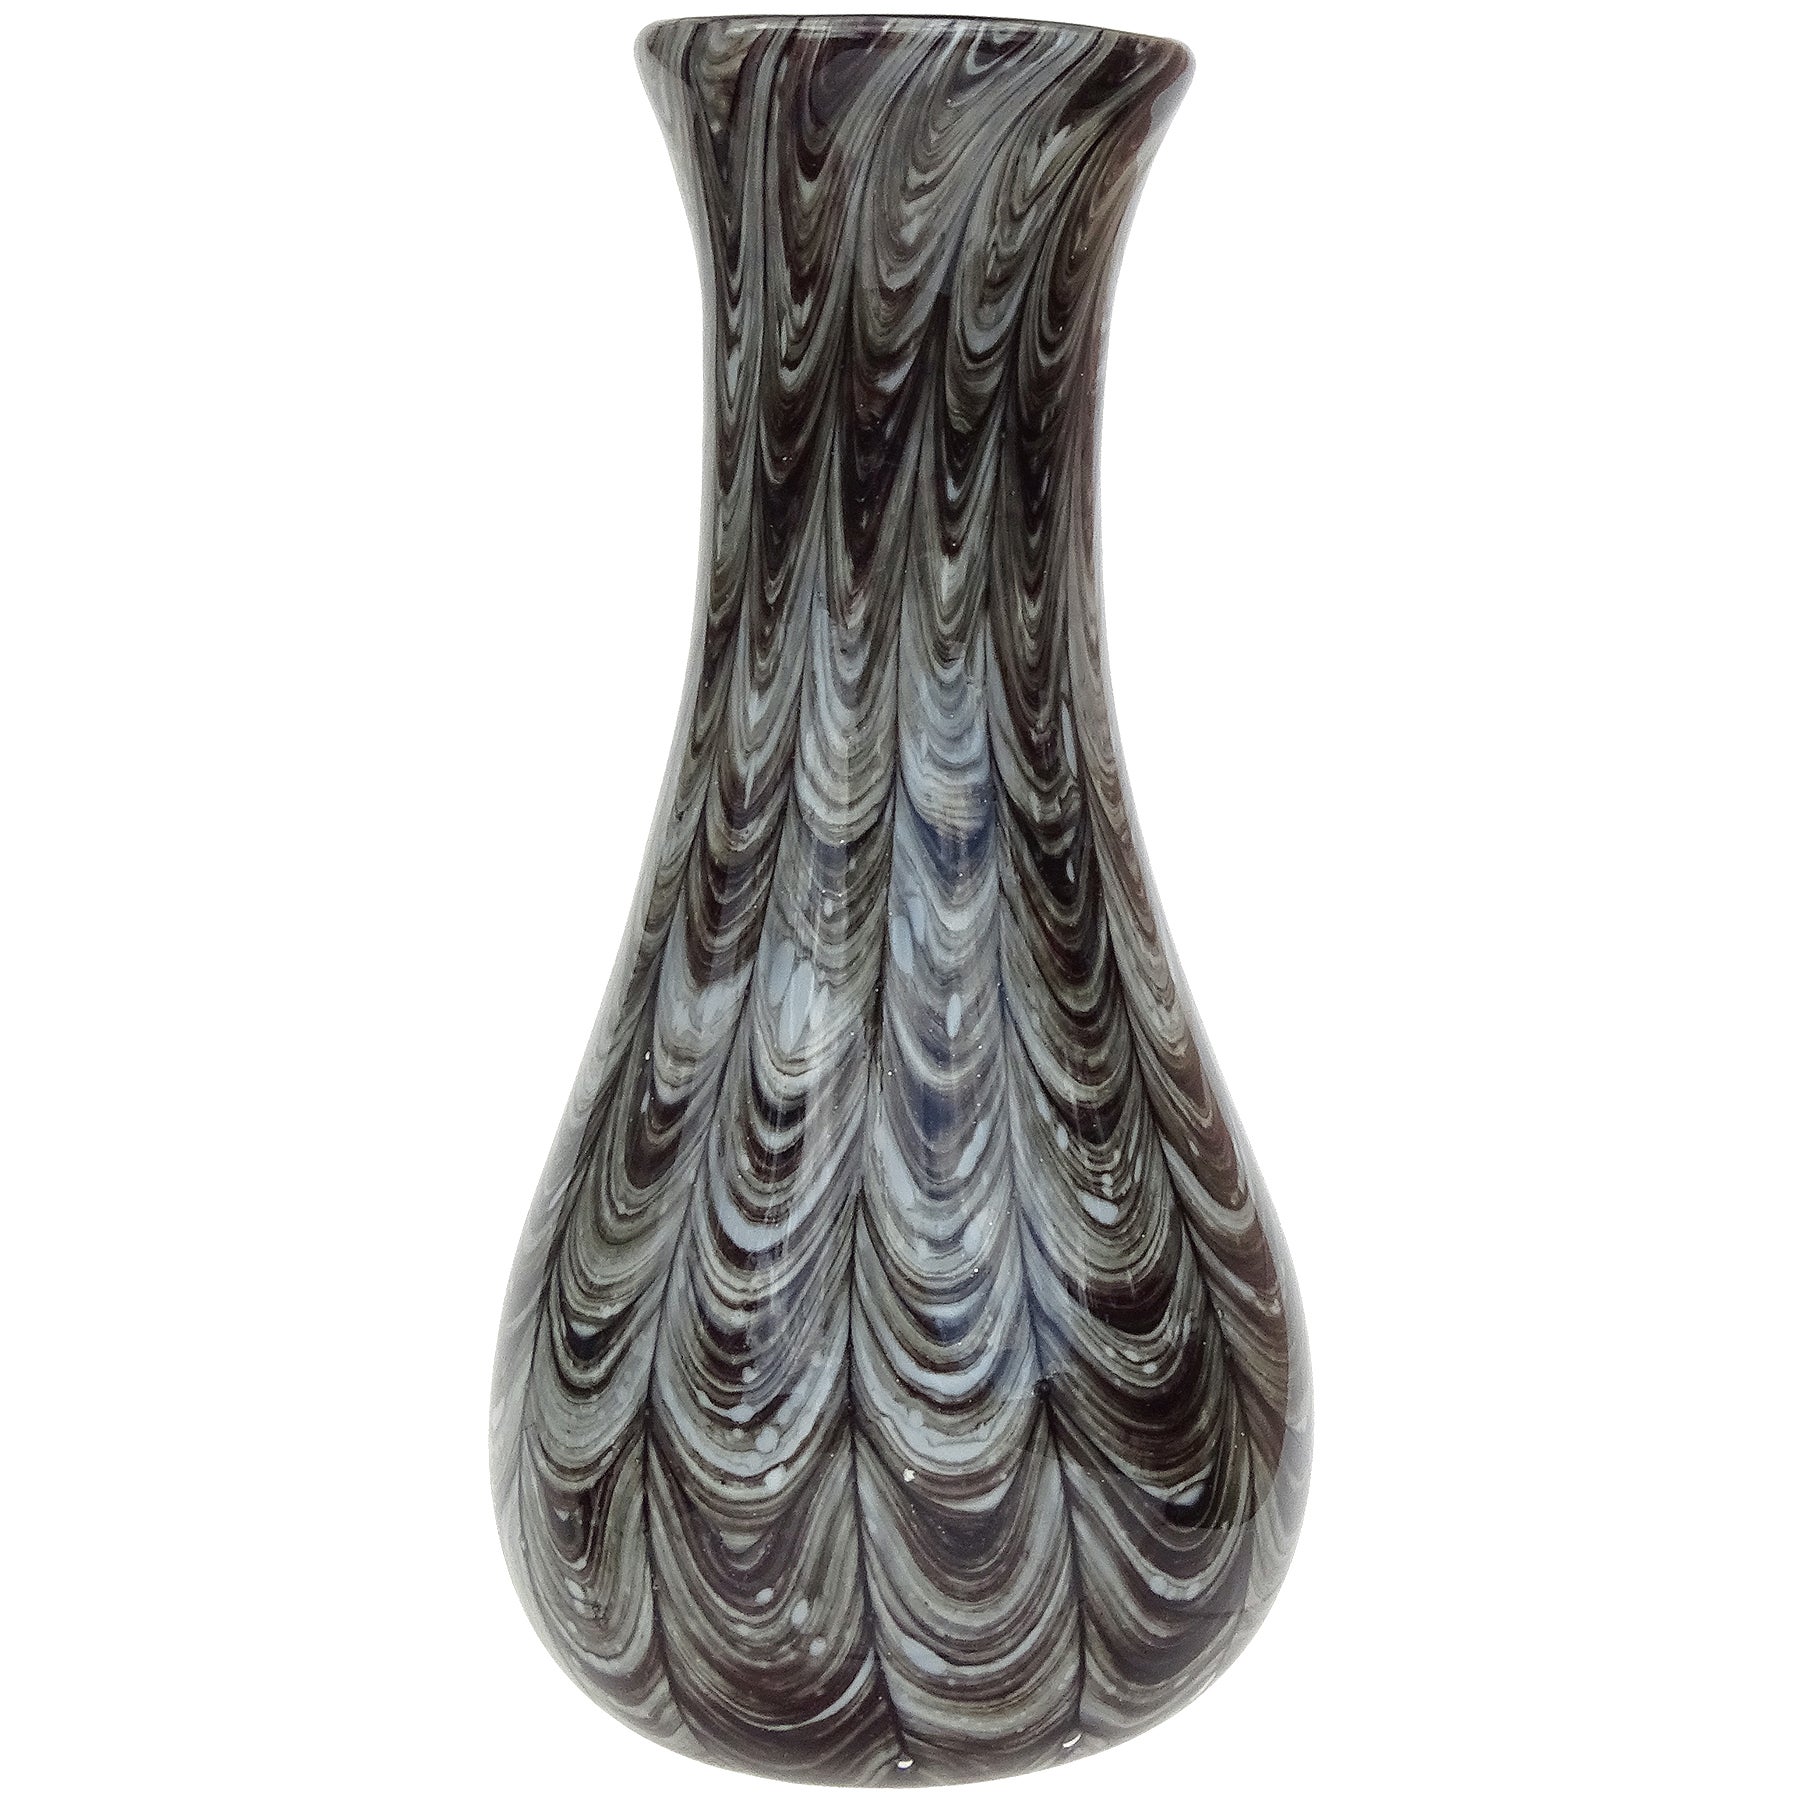 Barovier Toso Murano Neolitico 1954 Pulled Feather Design Italian Art Glass Vase For Sale